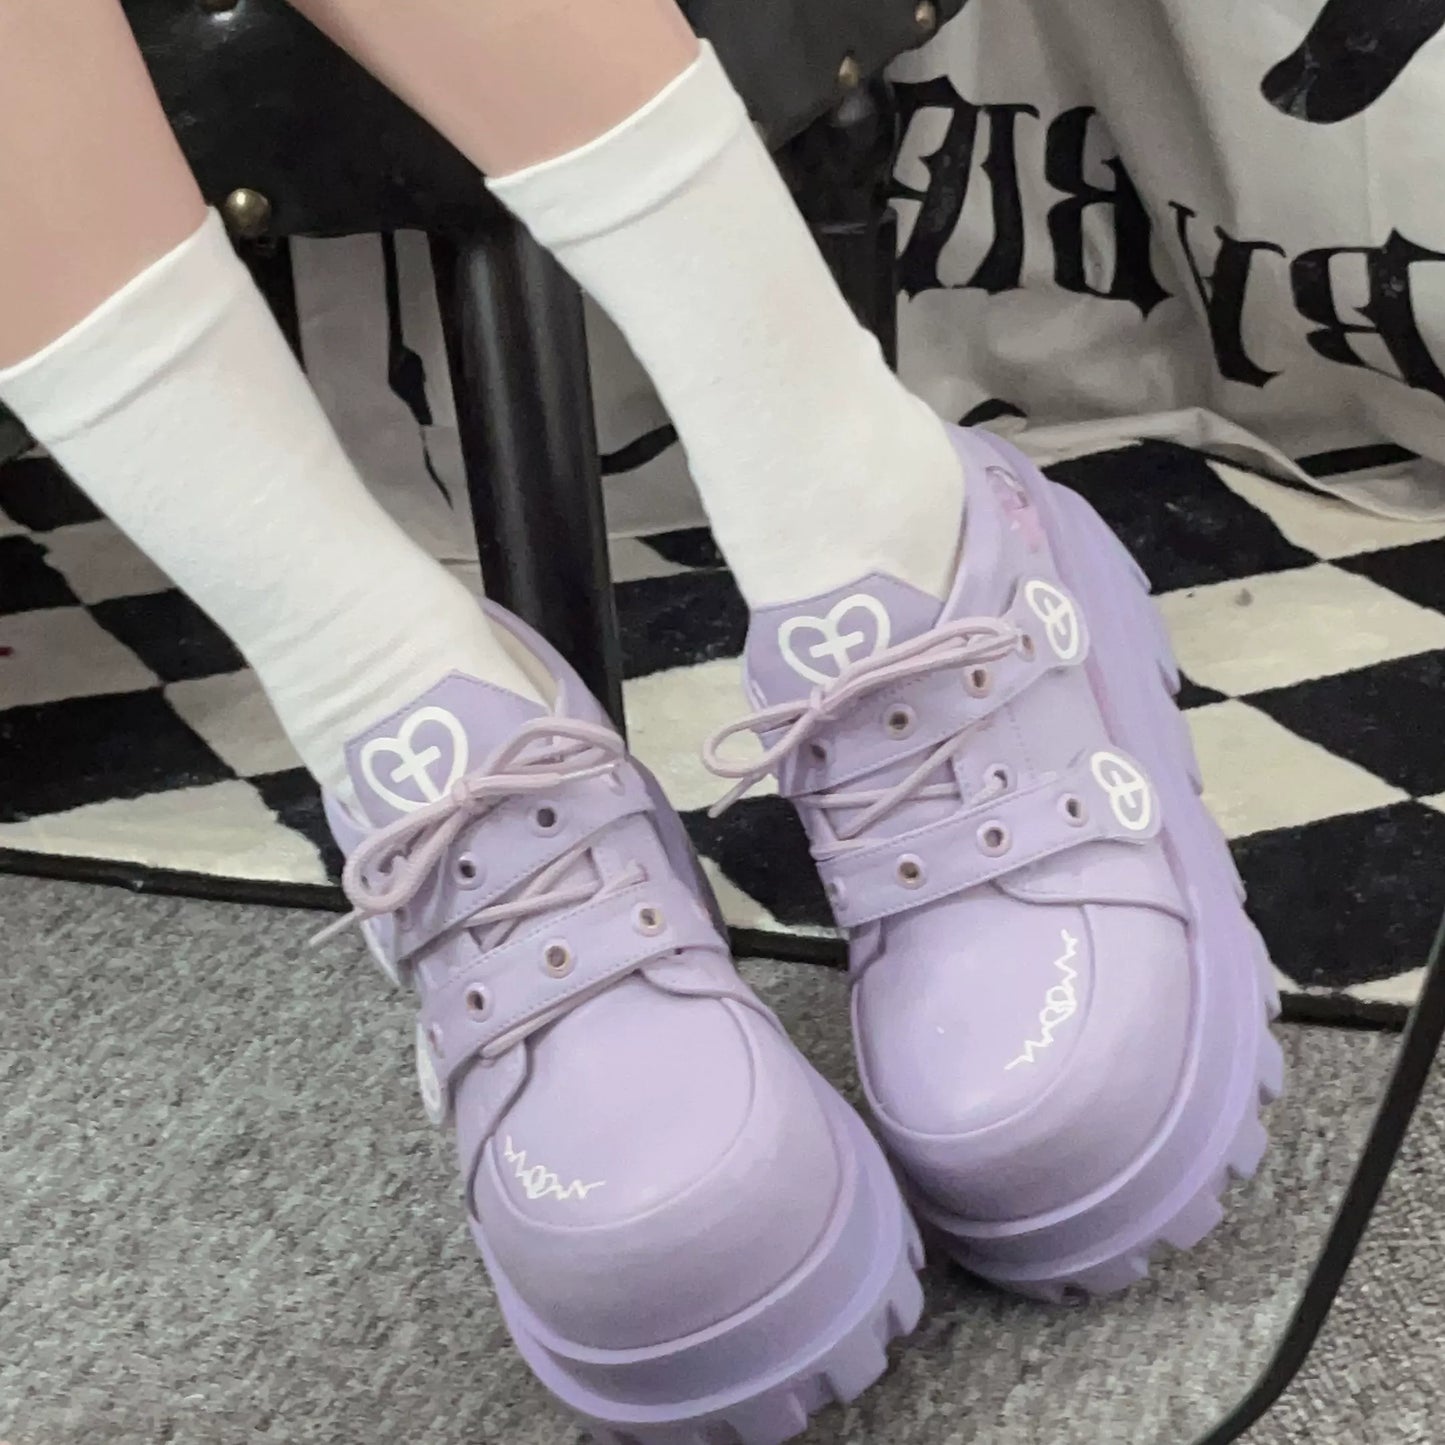 Jirai Kei Punk Fashion Cross Platform Shoes 4Colors 28958:344142